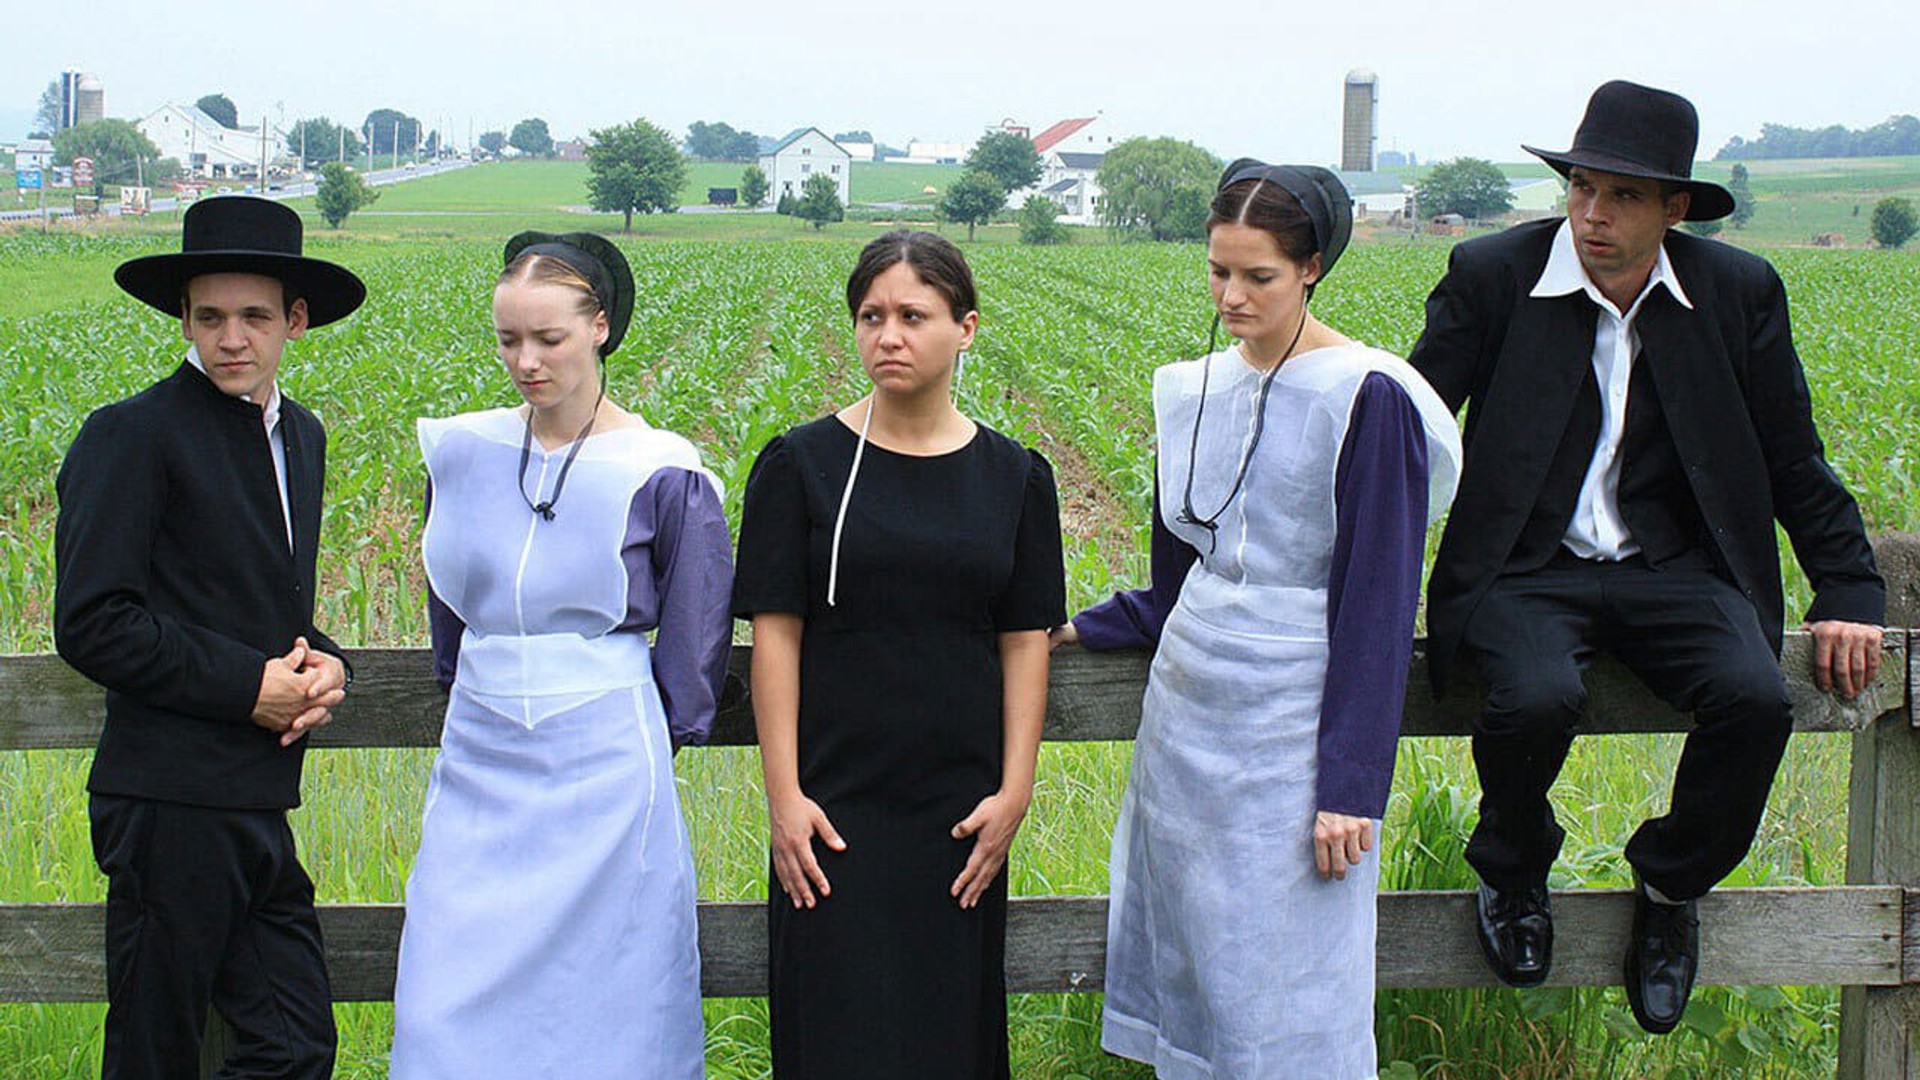 Breaking Amish background